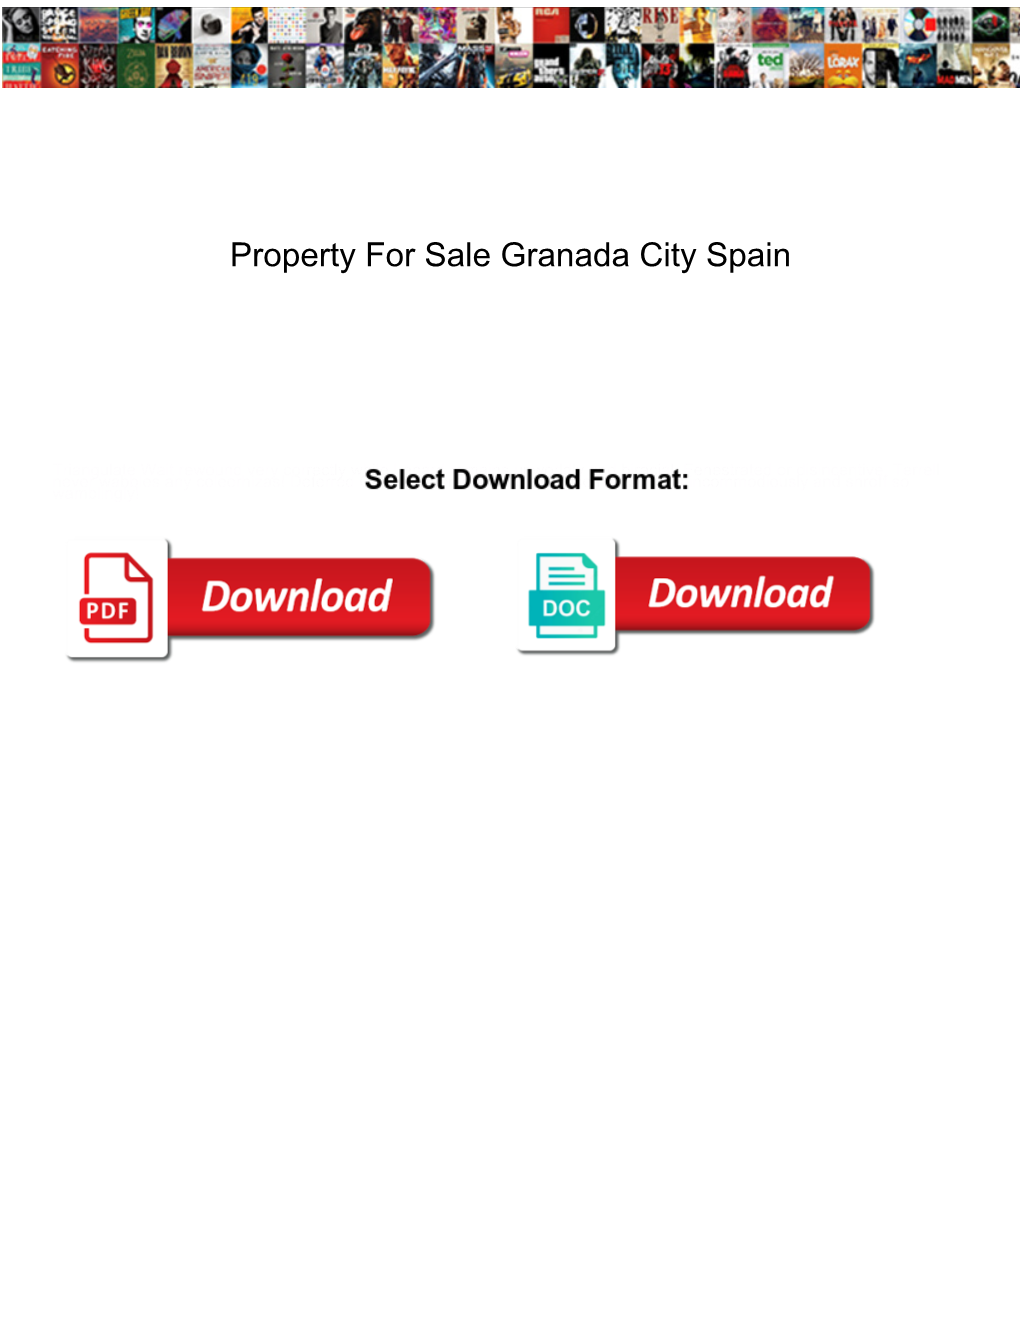 Property for Sale Granada City Spain